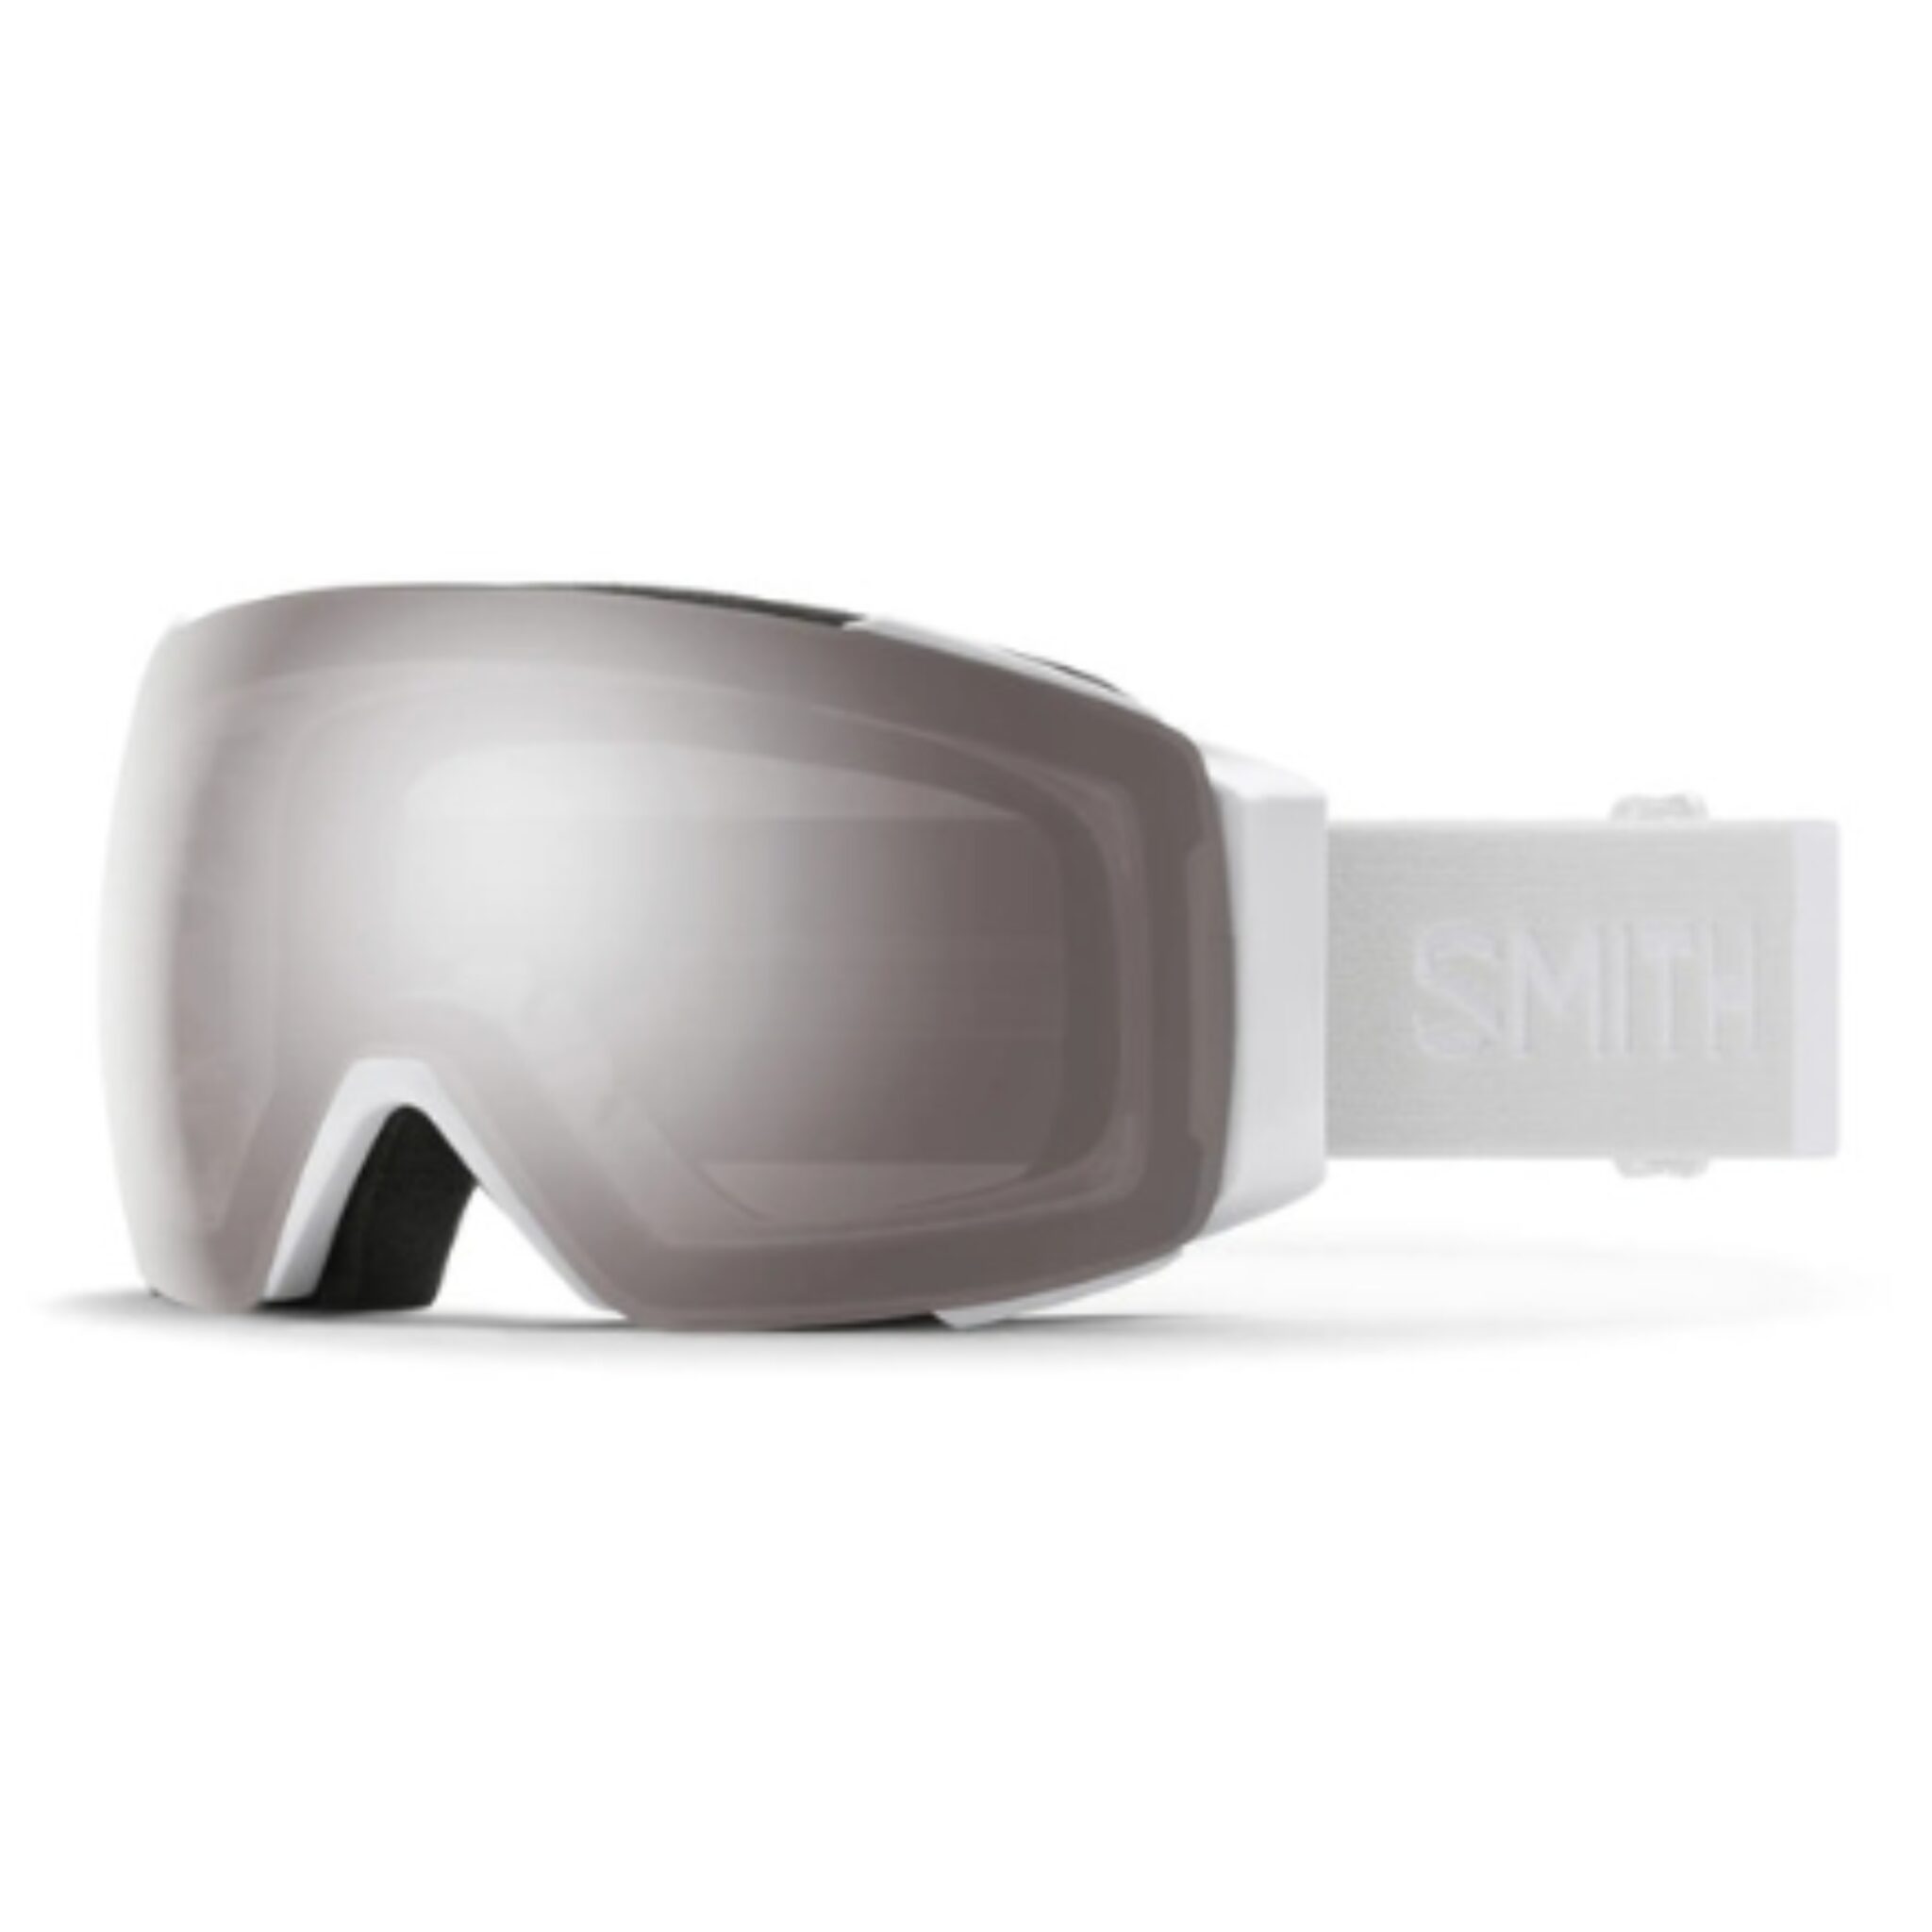 Best Ski Goggles for Women